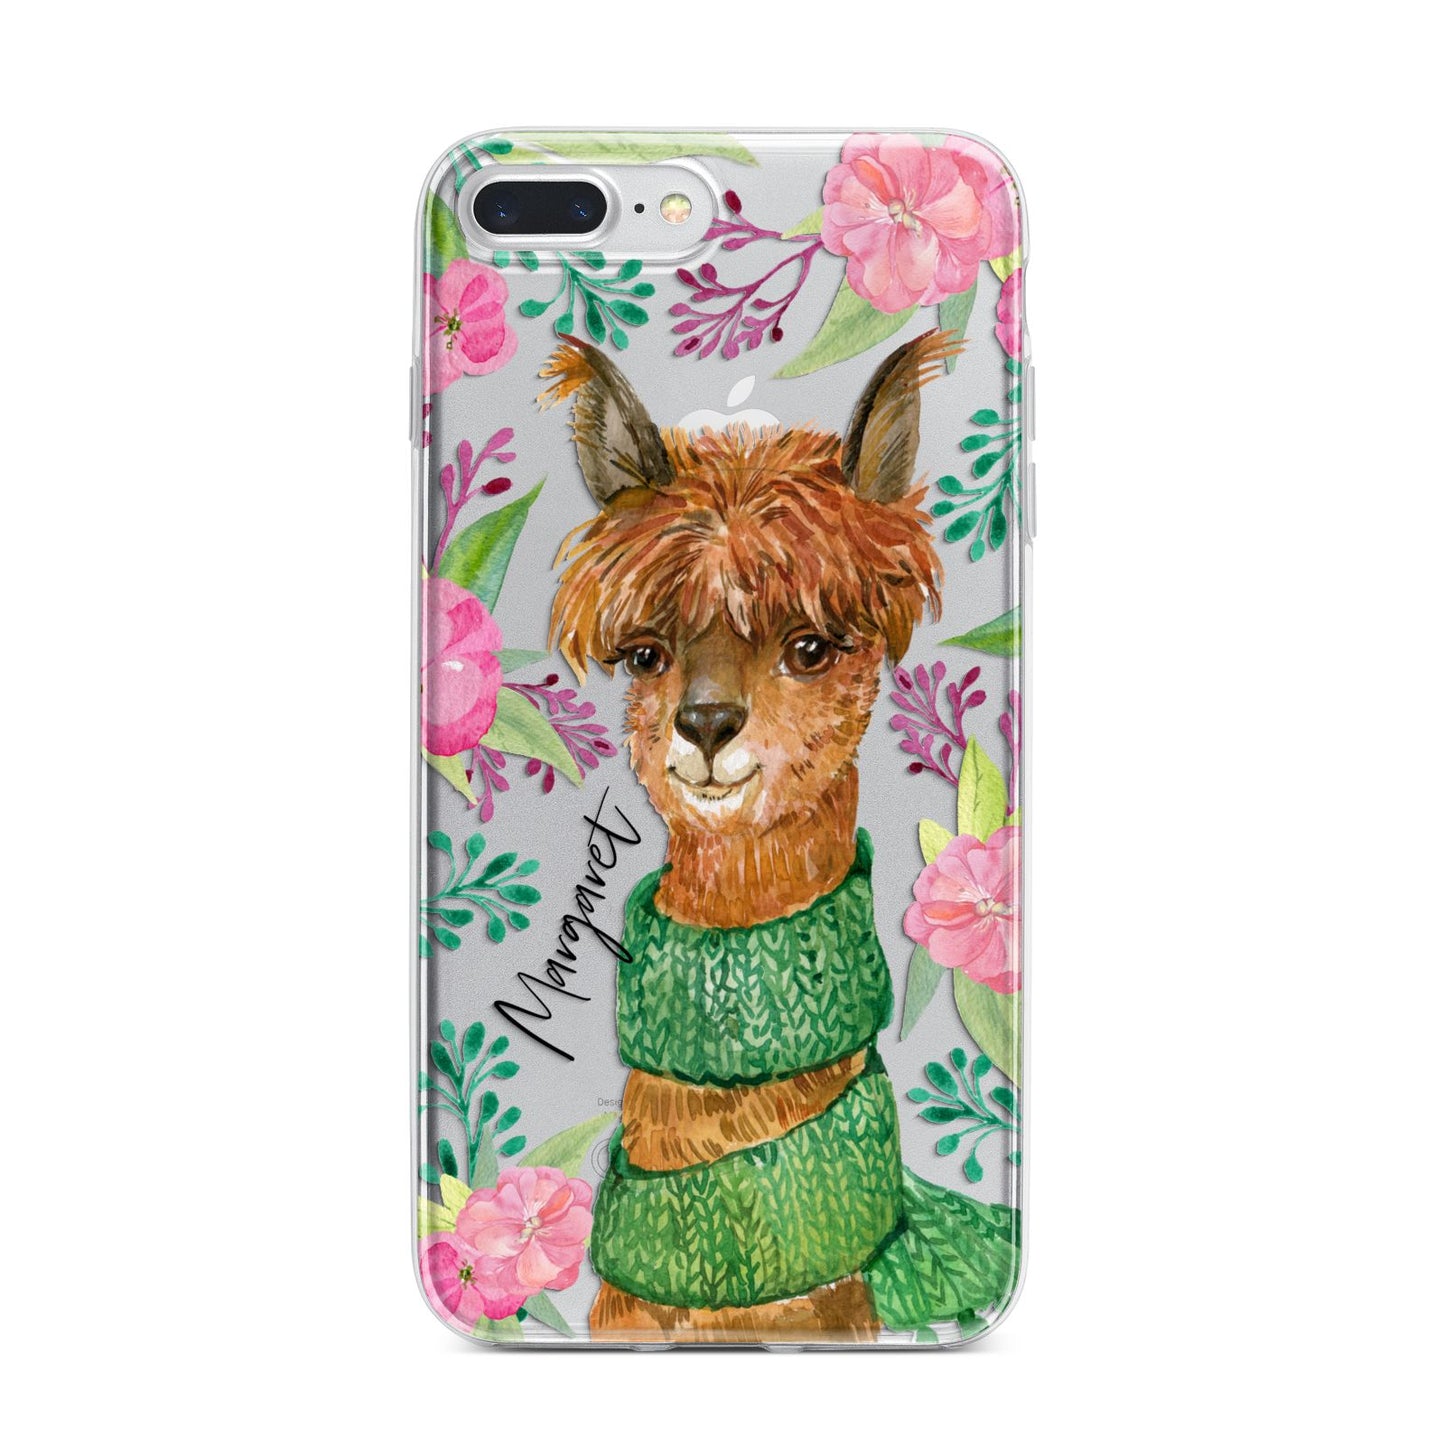 Personalised Alpaca iPhone 7 Plus Bumper Case on Silver iPhone